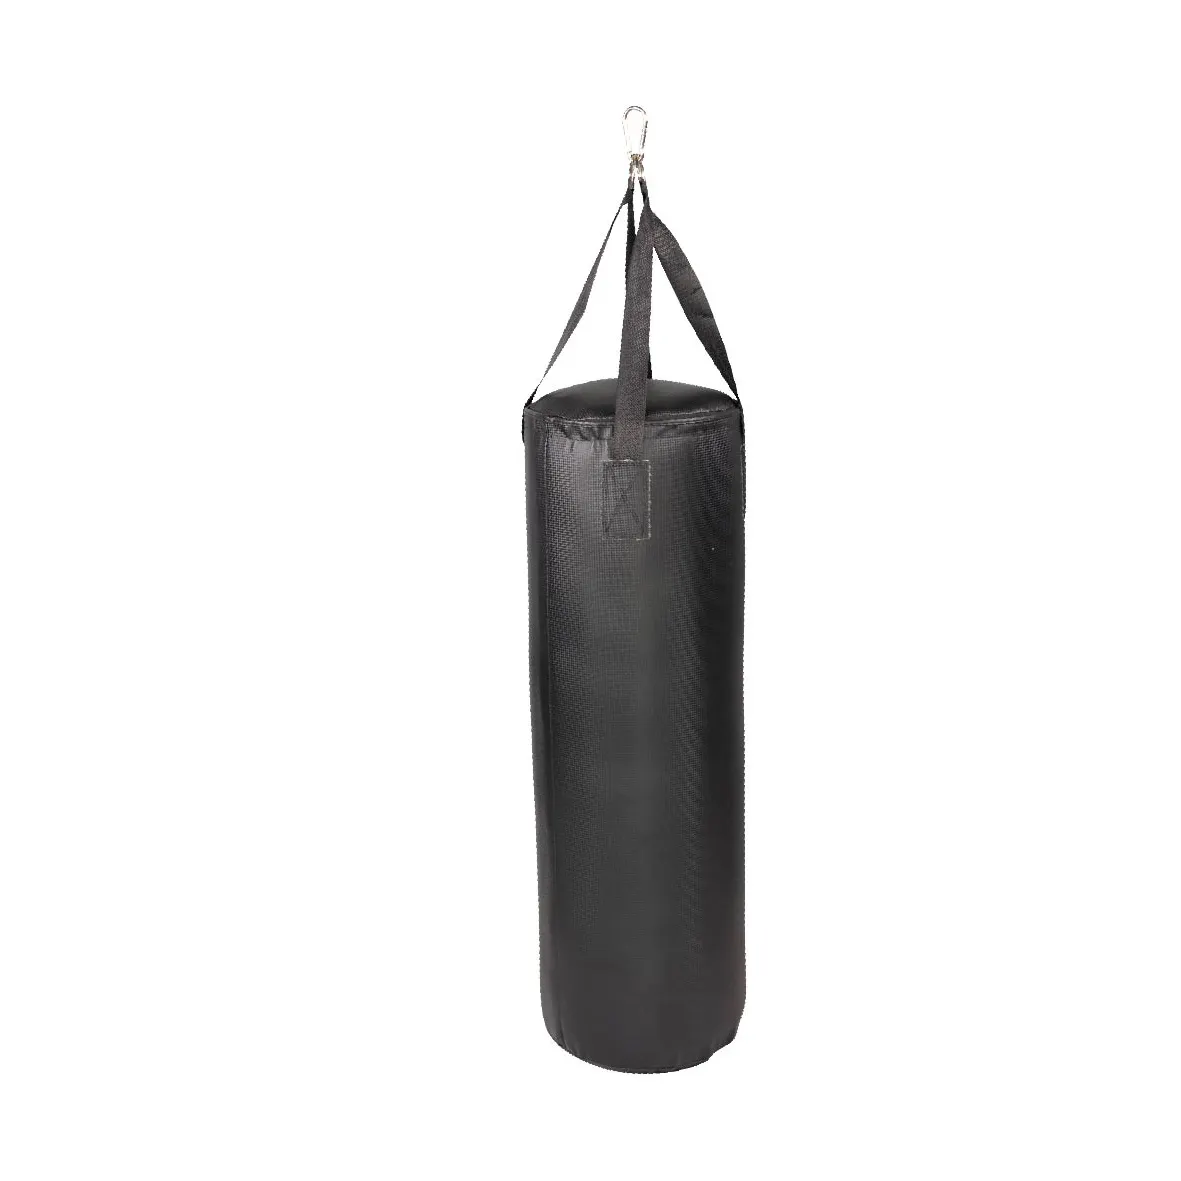 Professional Gym Equipment PVC MMA Kickboxing Target Filling Heavy Sand Bag Training Punch Bag